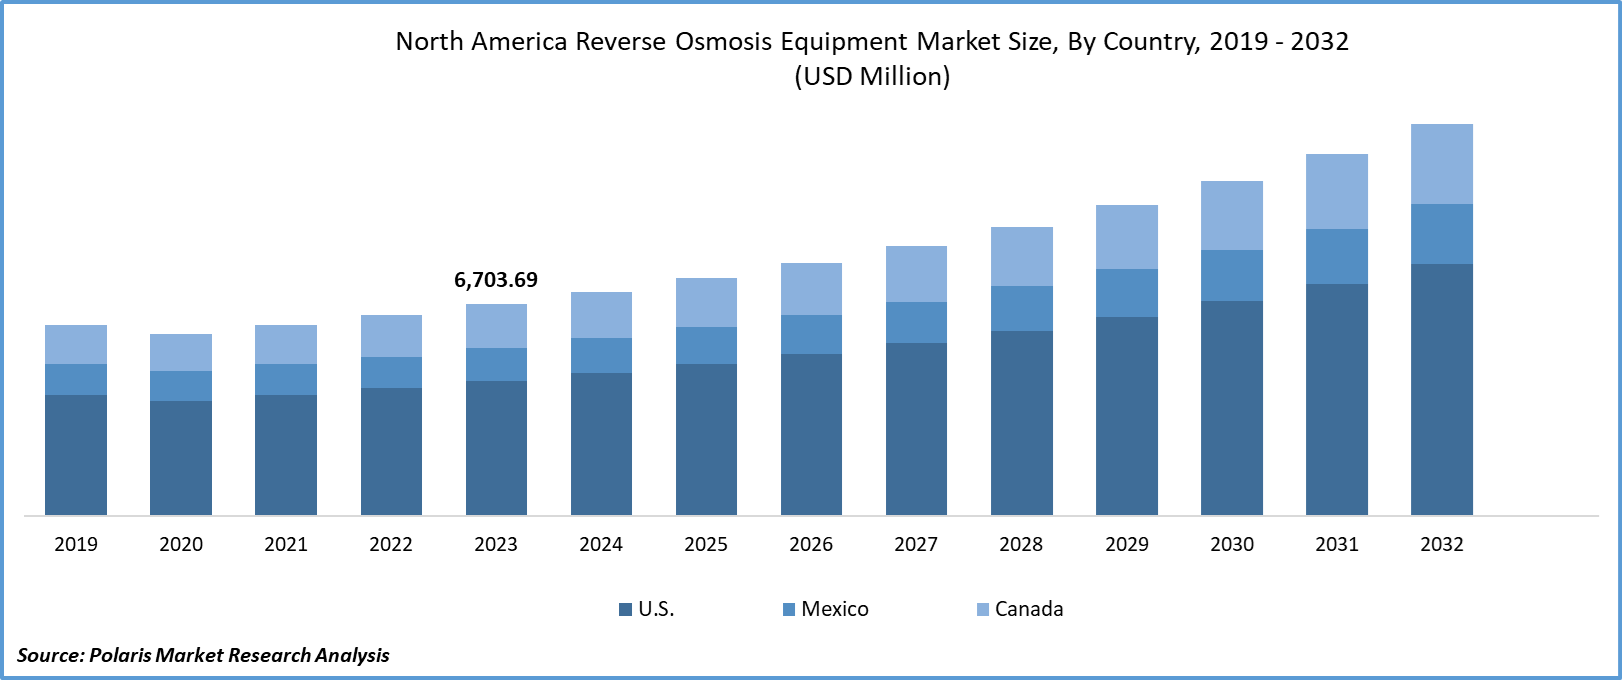 North America Reverse Osmosis Equipment Market Size